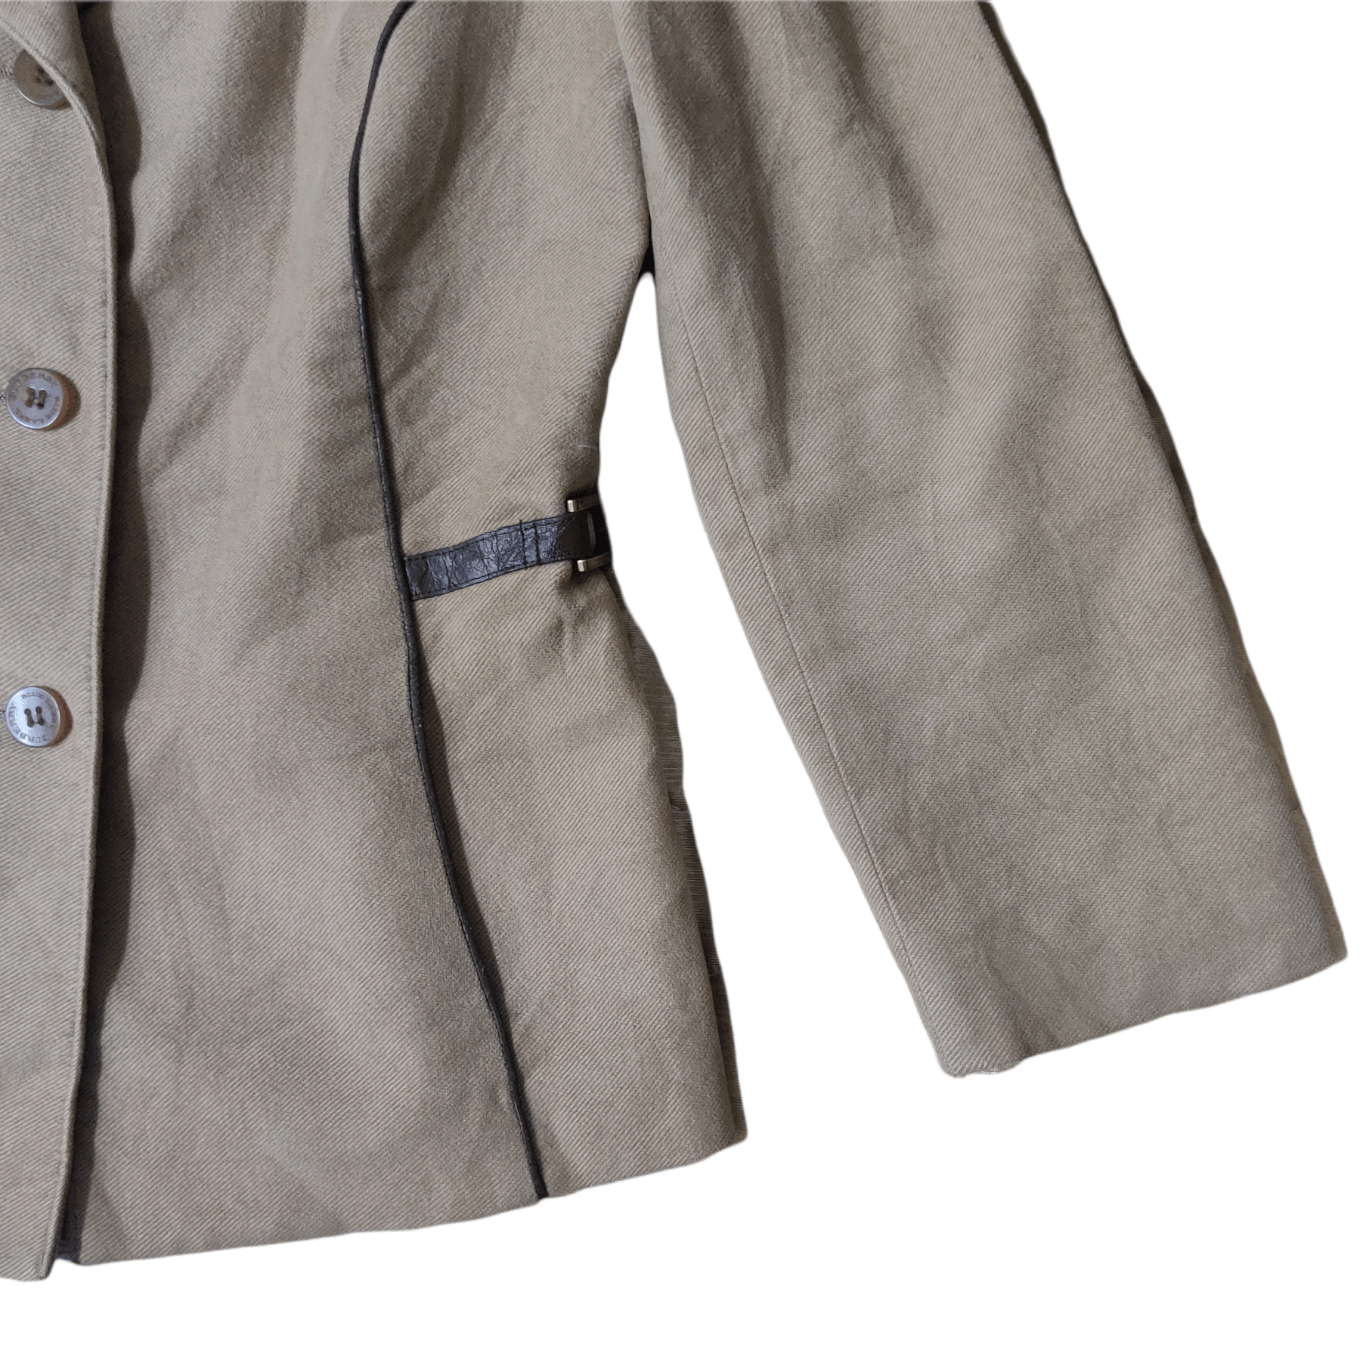 Burberry Blue Label Women's Coat Jacket - 4